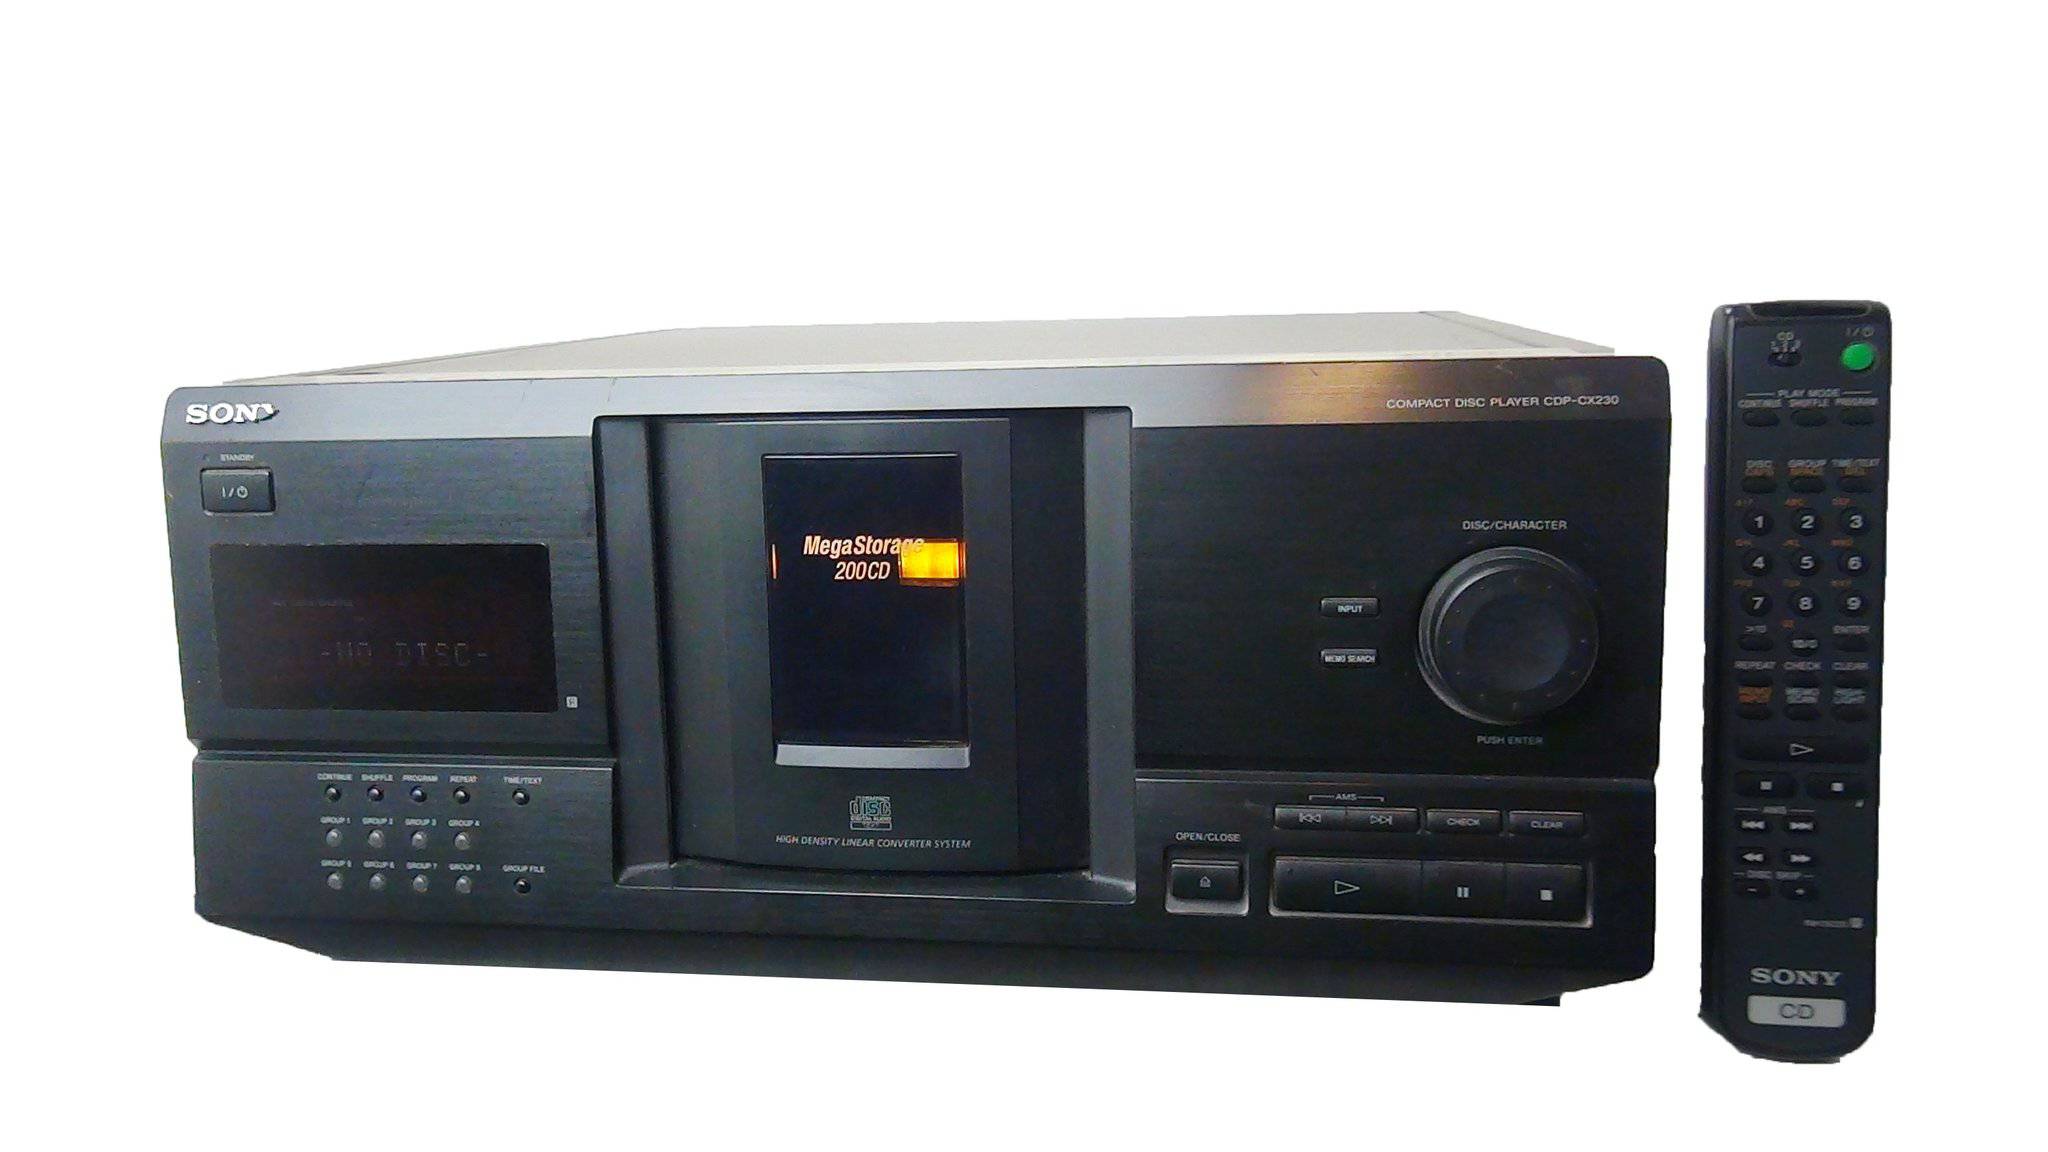 Sony CDP-CX230